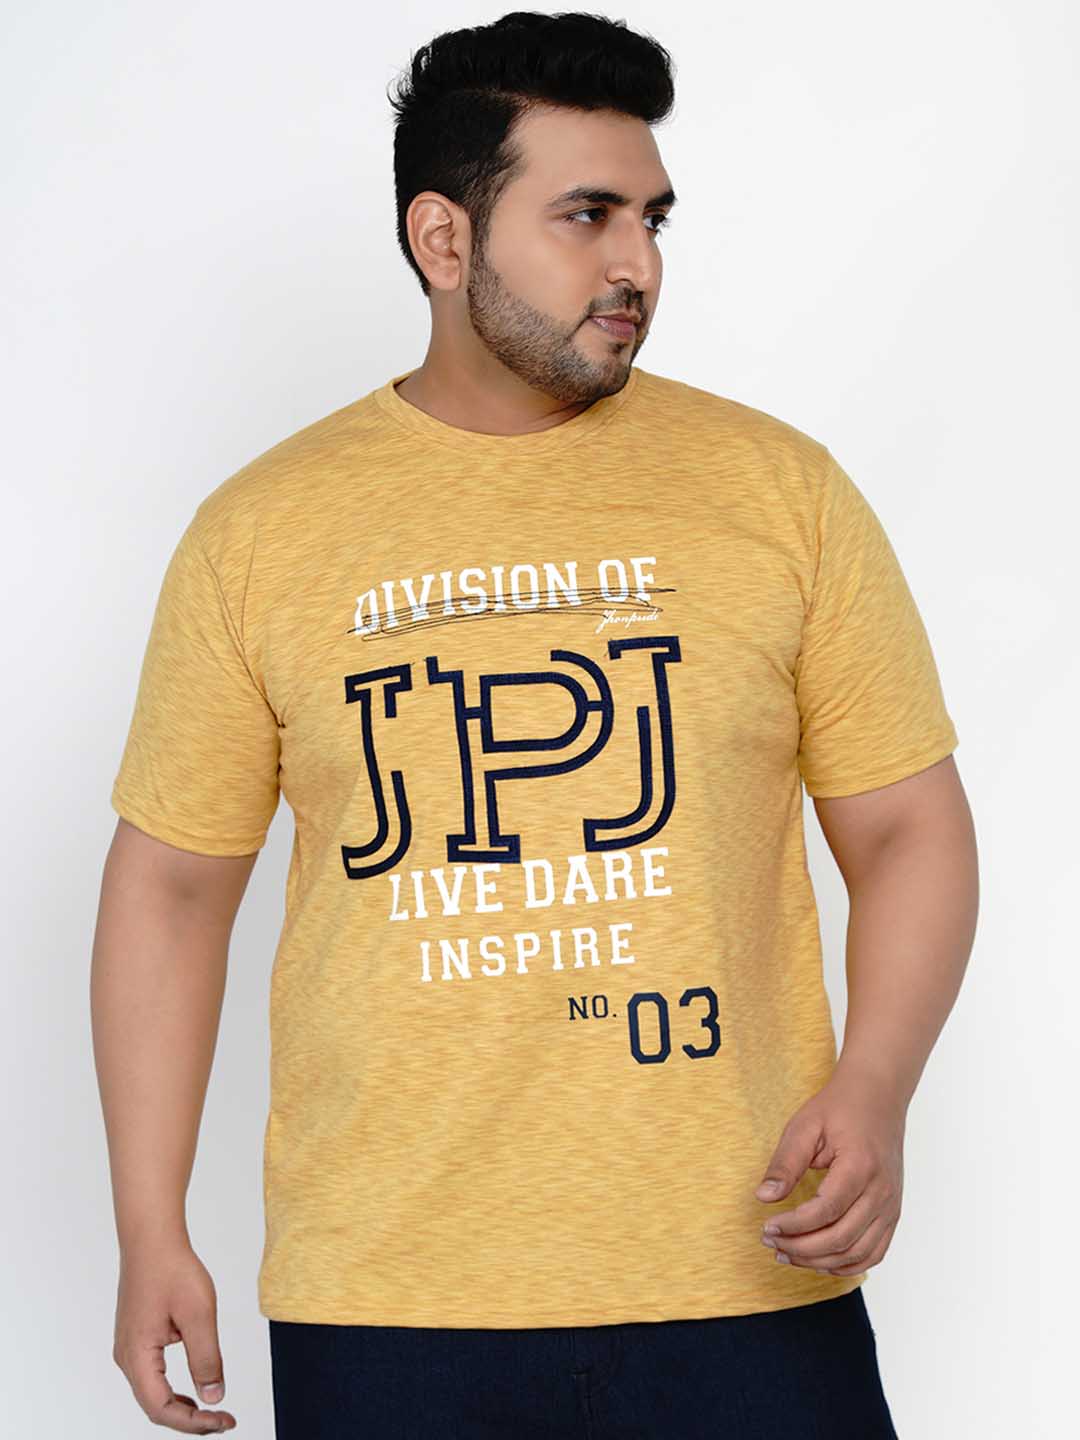 upperwear/tshirts/JPTSR392B/jptsr392b-4.jpg